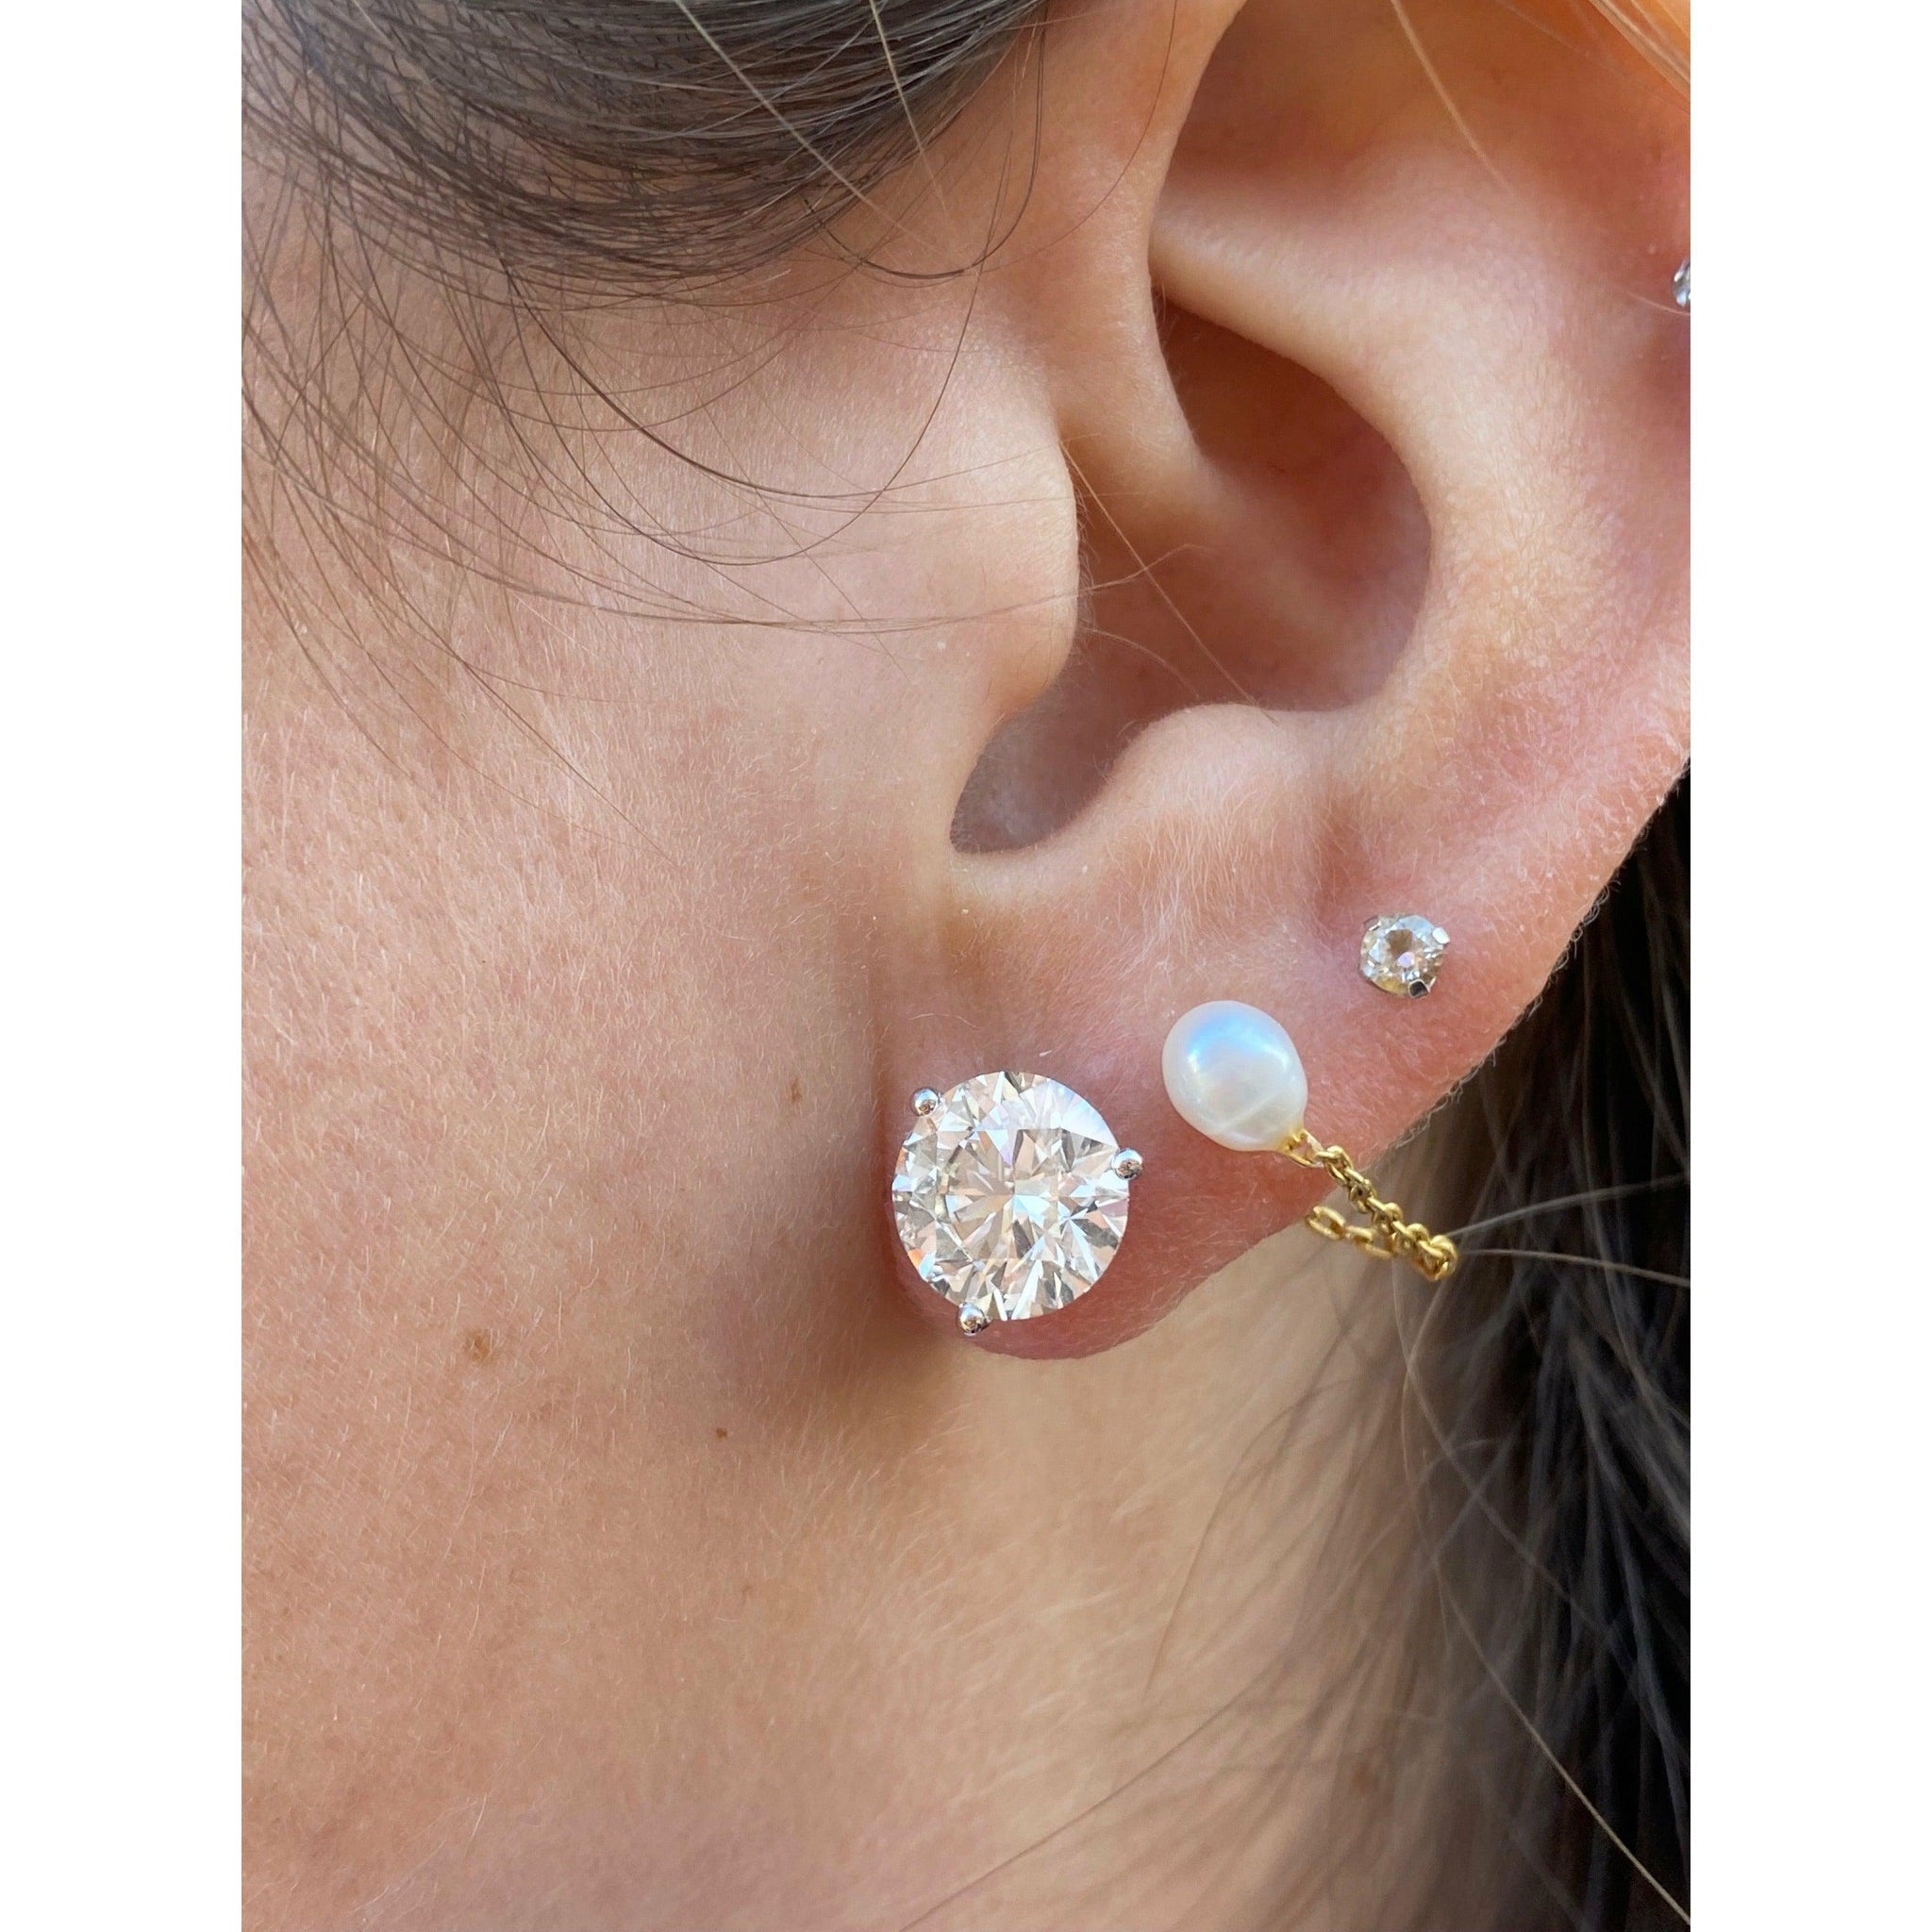 6.00 Carat Lab Grown Diamond Stud Earrings in 14k solid Gold - 3 Prong